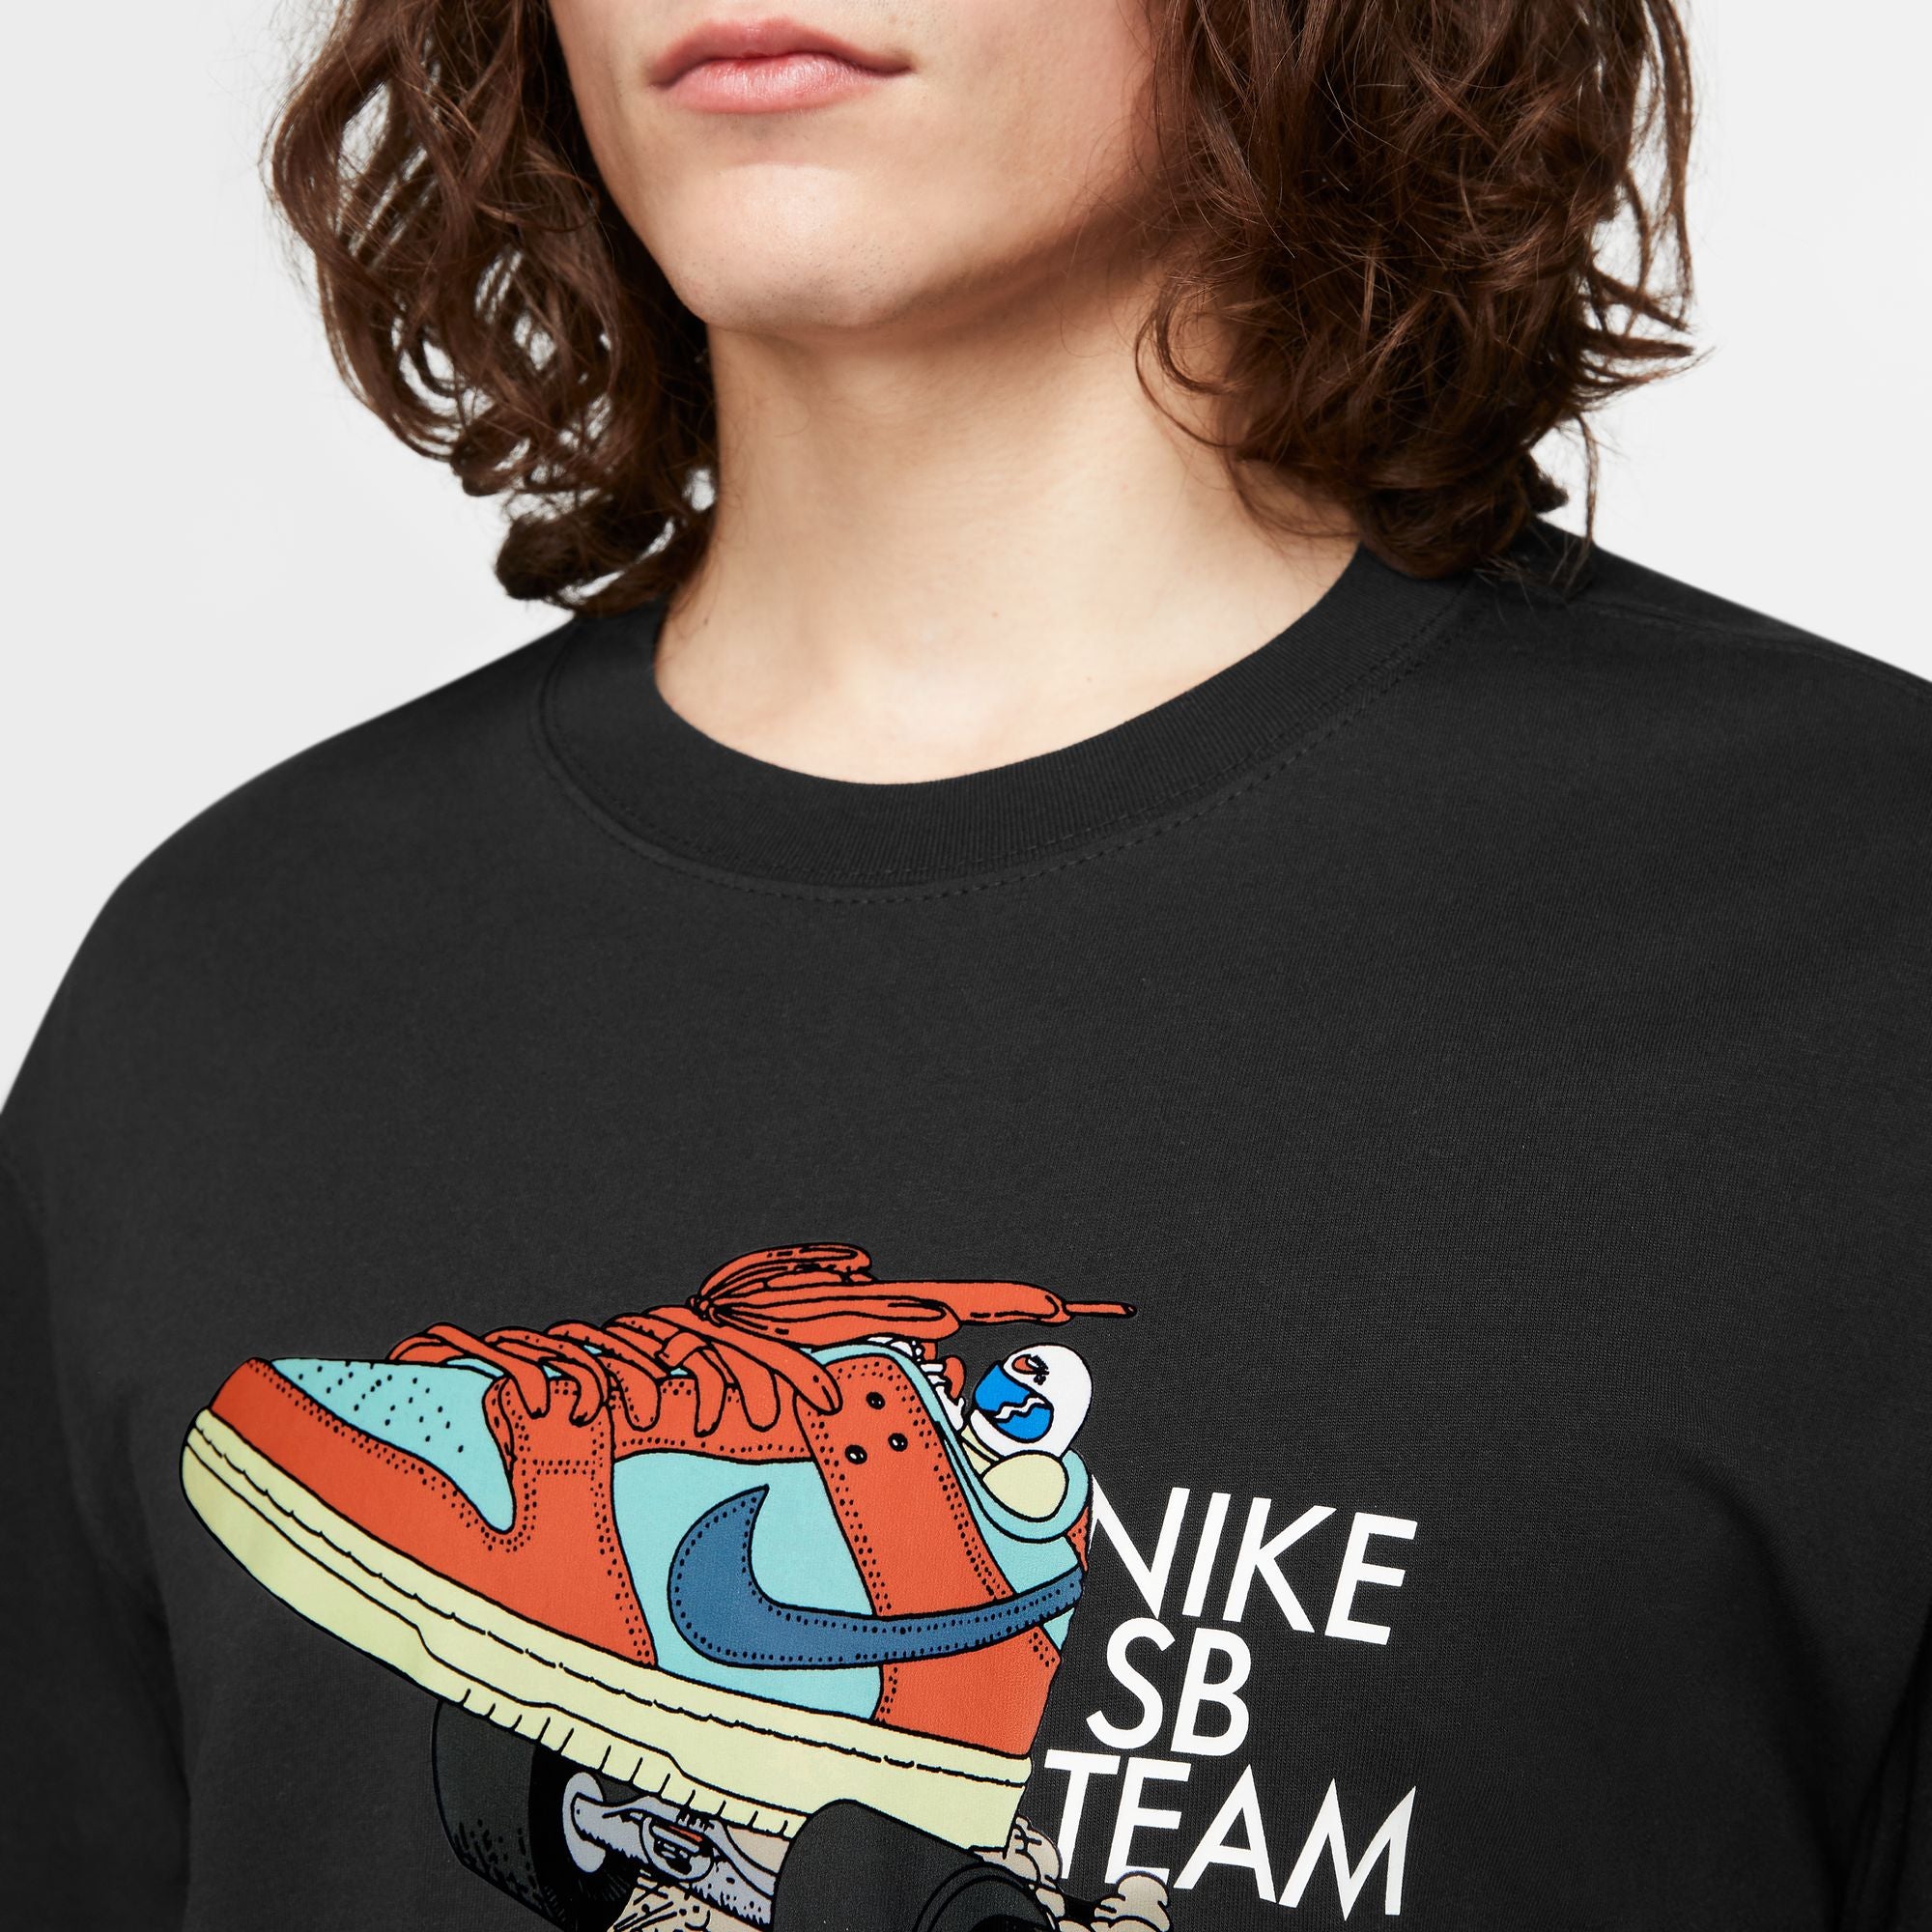 Nike SB Dunkteam T-shirt - Black